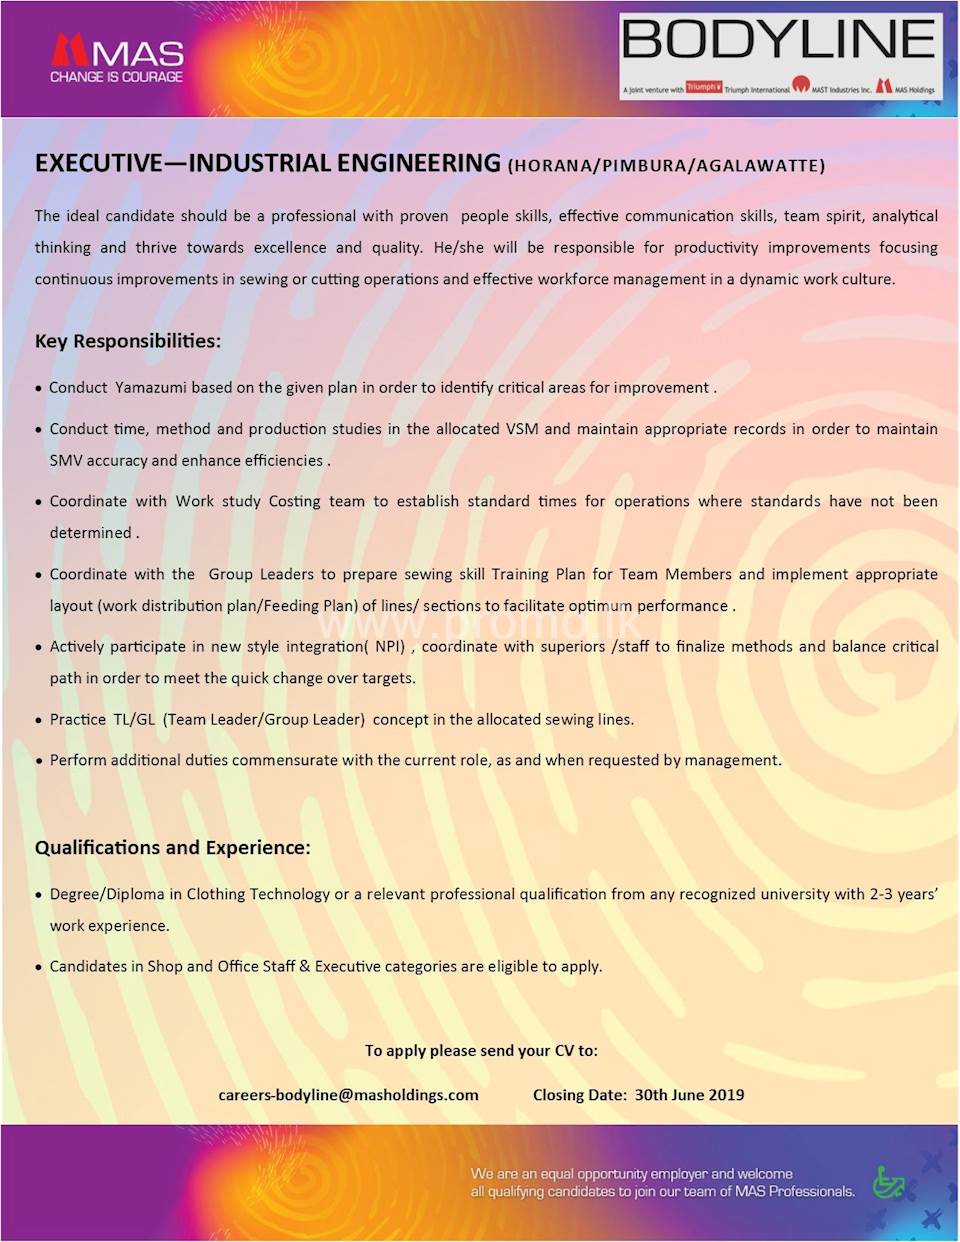 Executive - Industrial Engineering (Horana/Pimbura/Agalawatte)